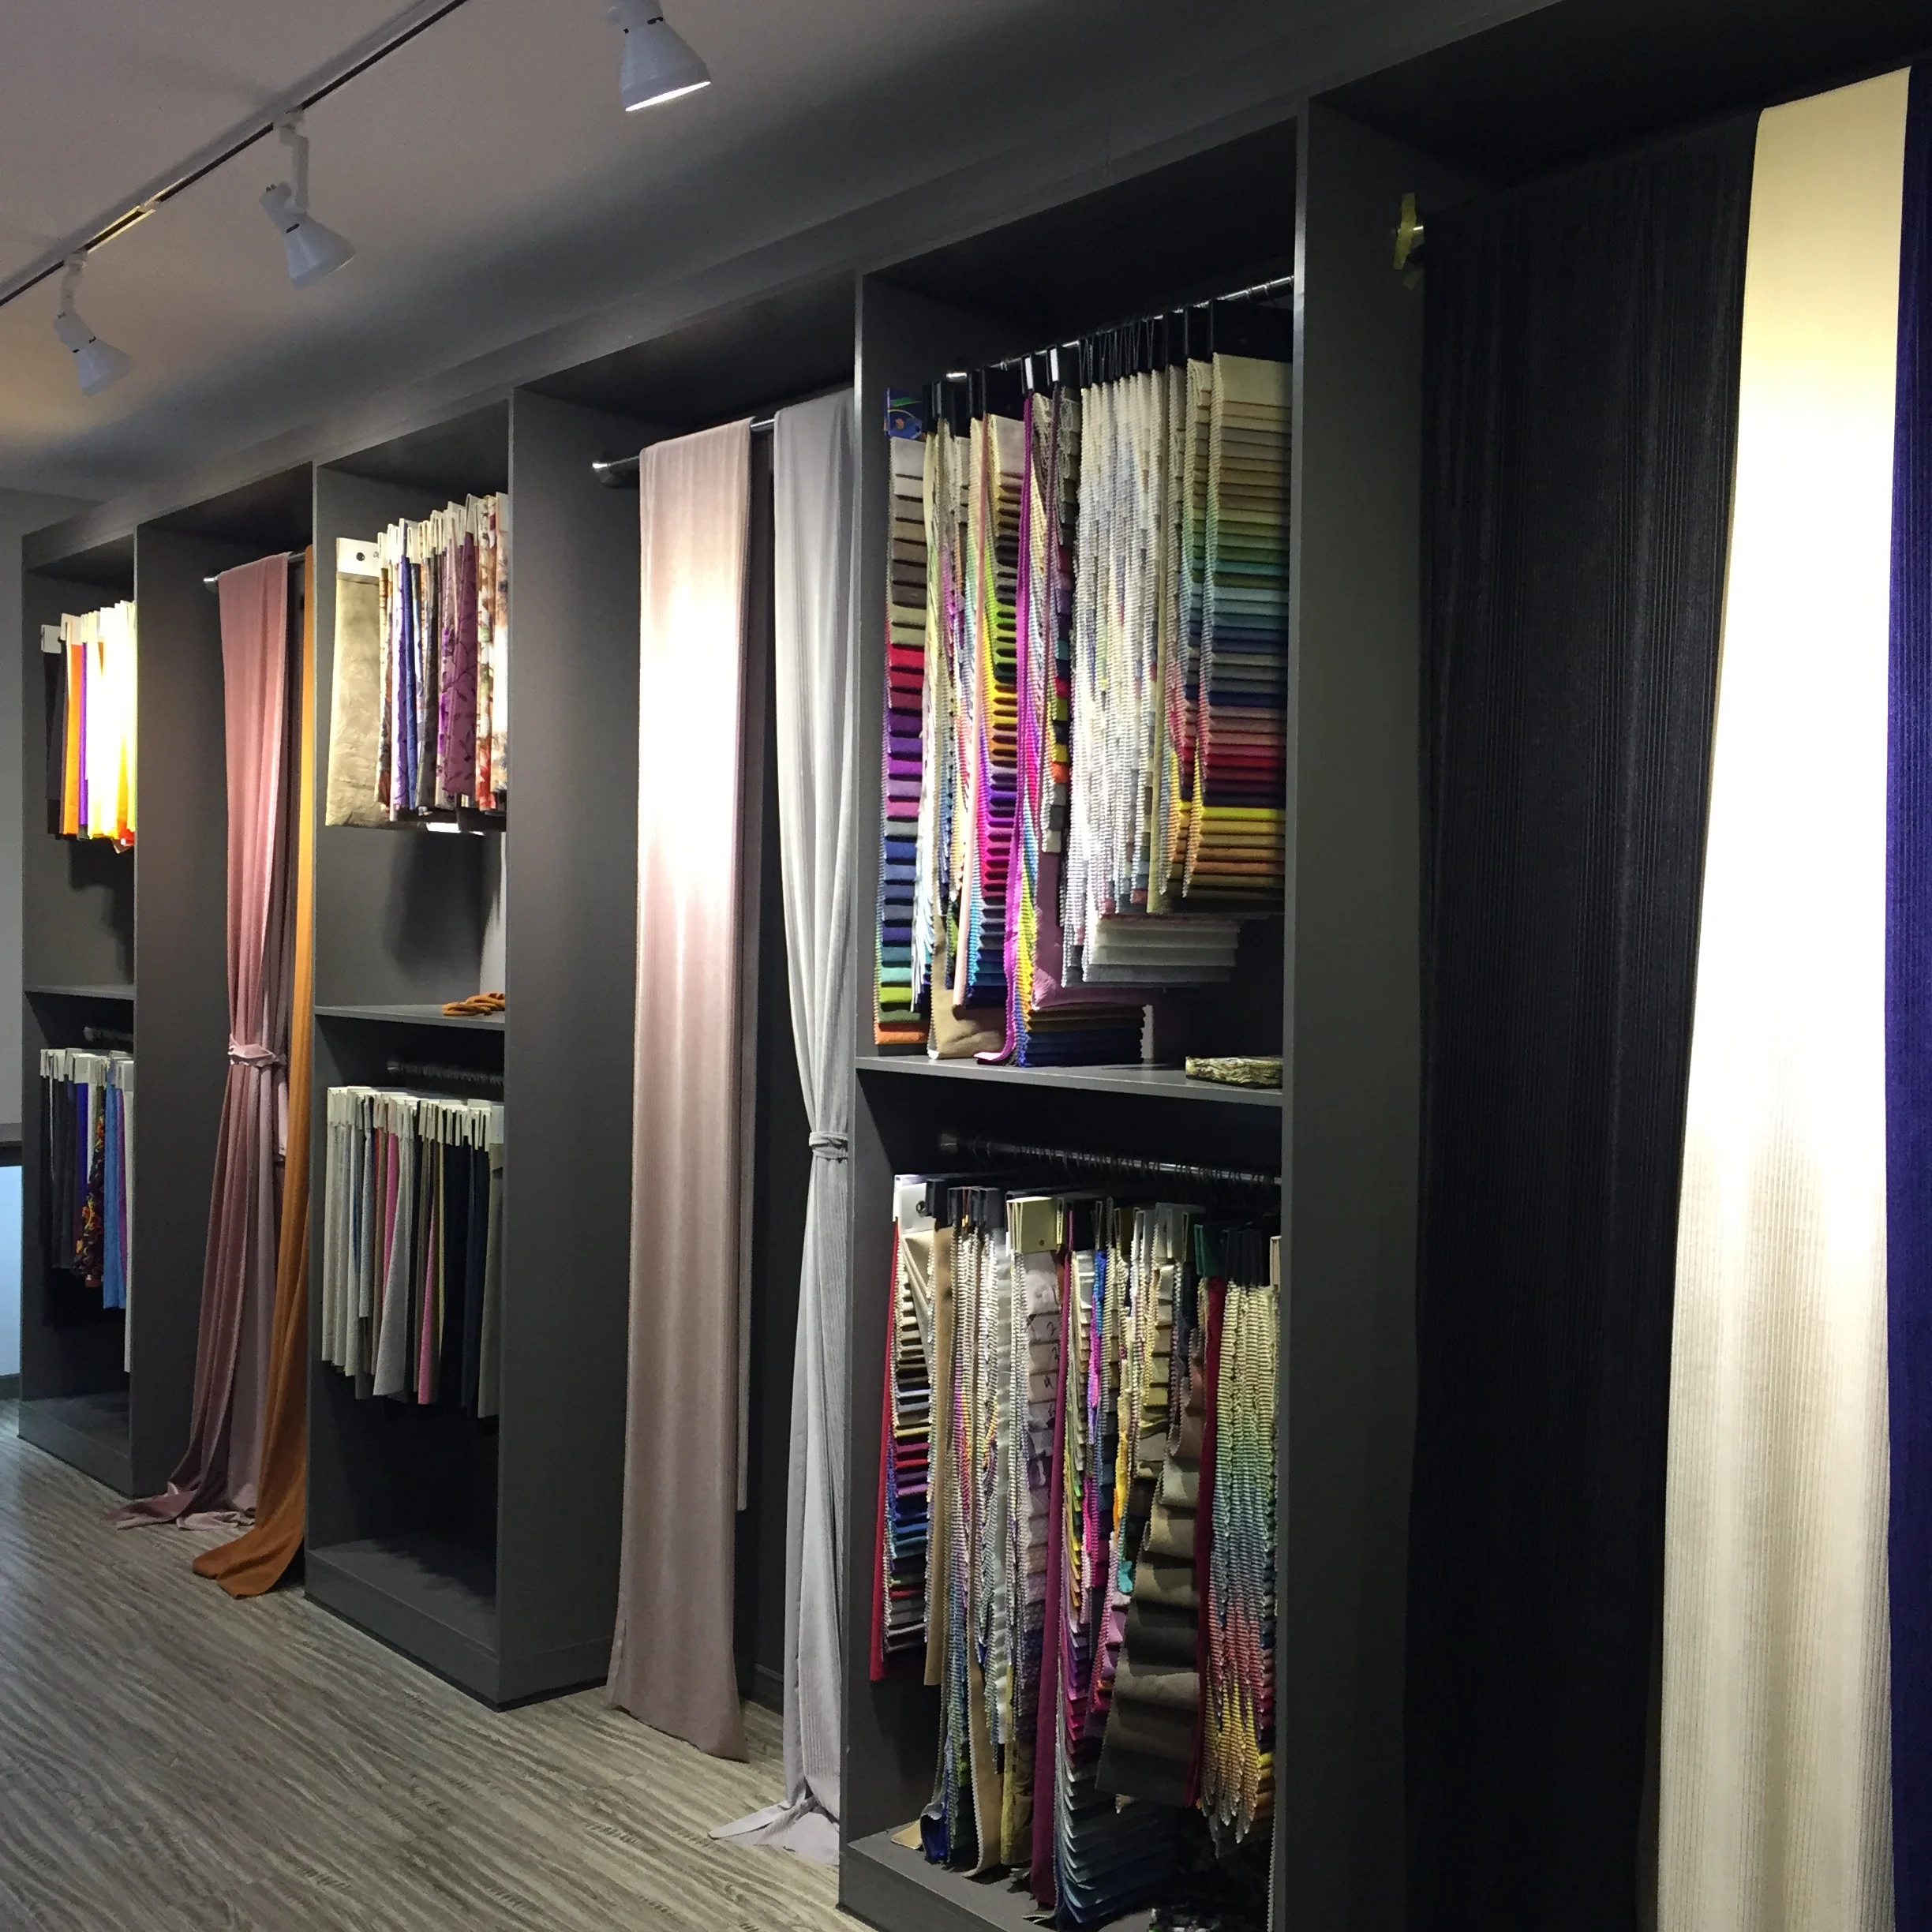 
Factory sale 100% Polyester Holland velvet fabric upholstery velvet fabric for curtain fabric textile 